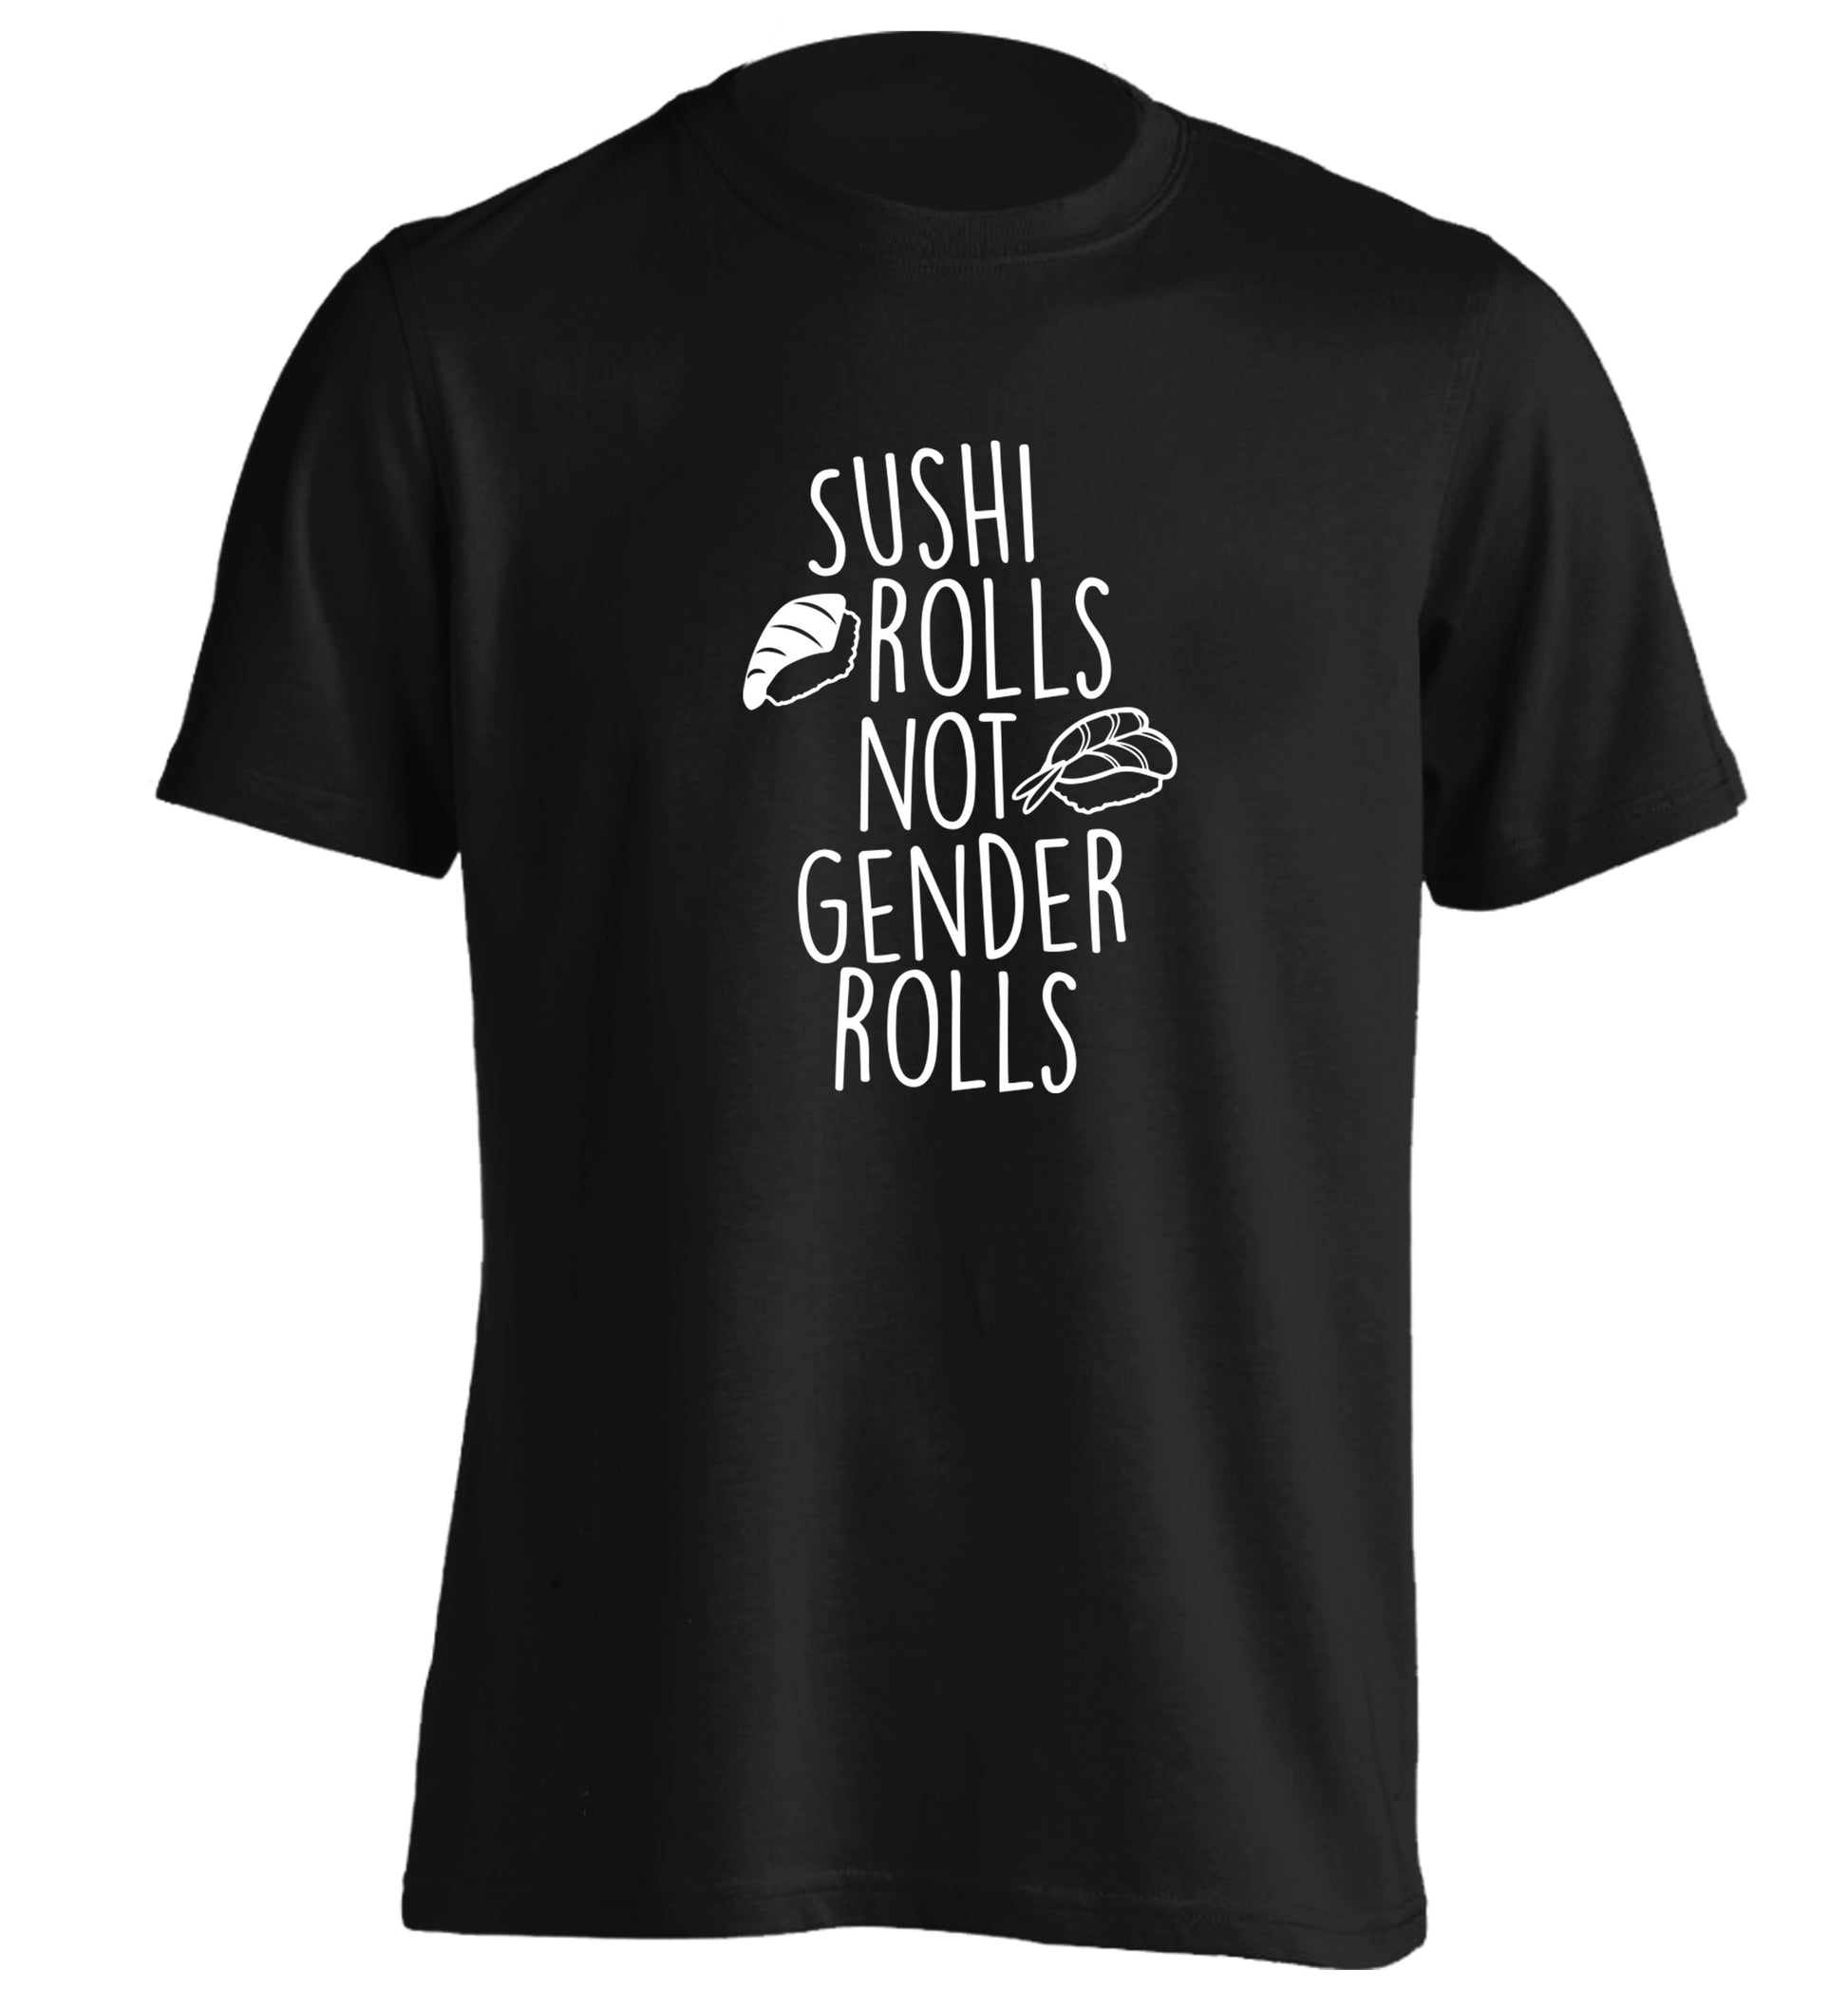 Sushi rolls not gender rolls adults unisex black Tshirt 2XL